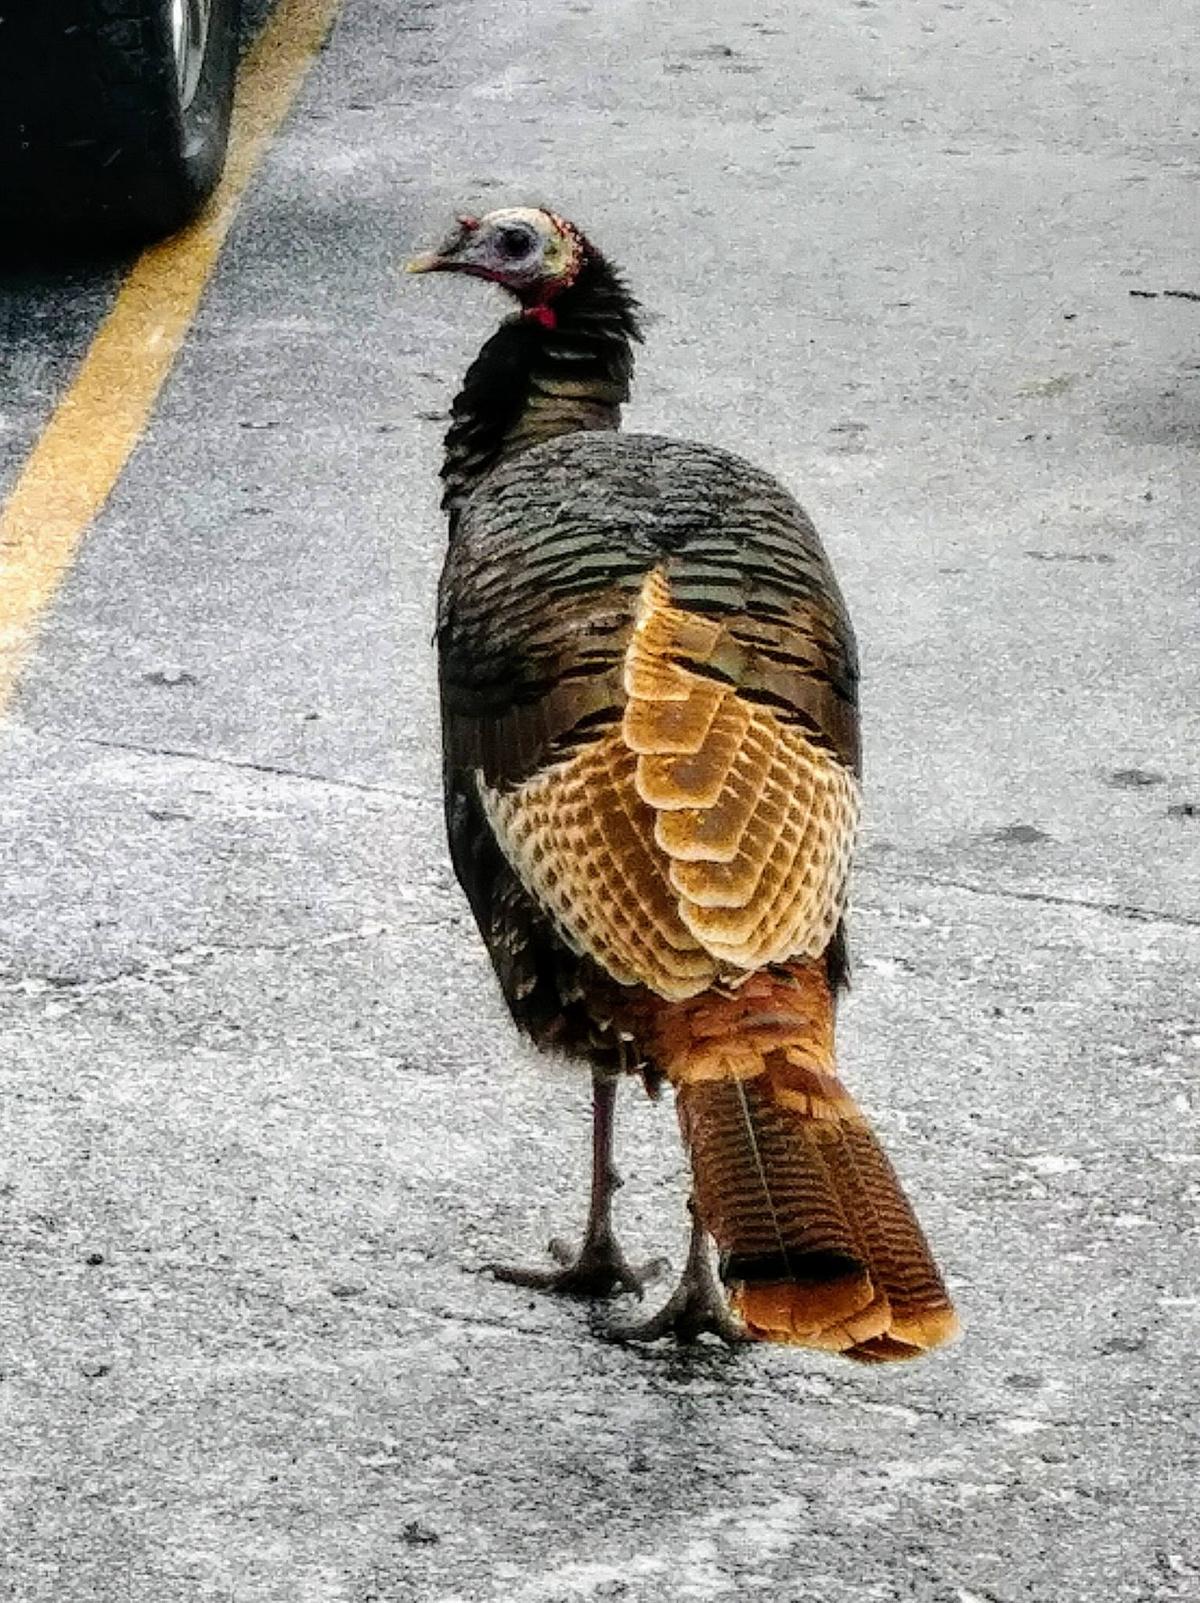 A wild turkey walking through a parking lot